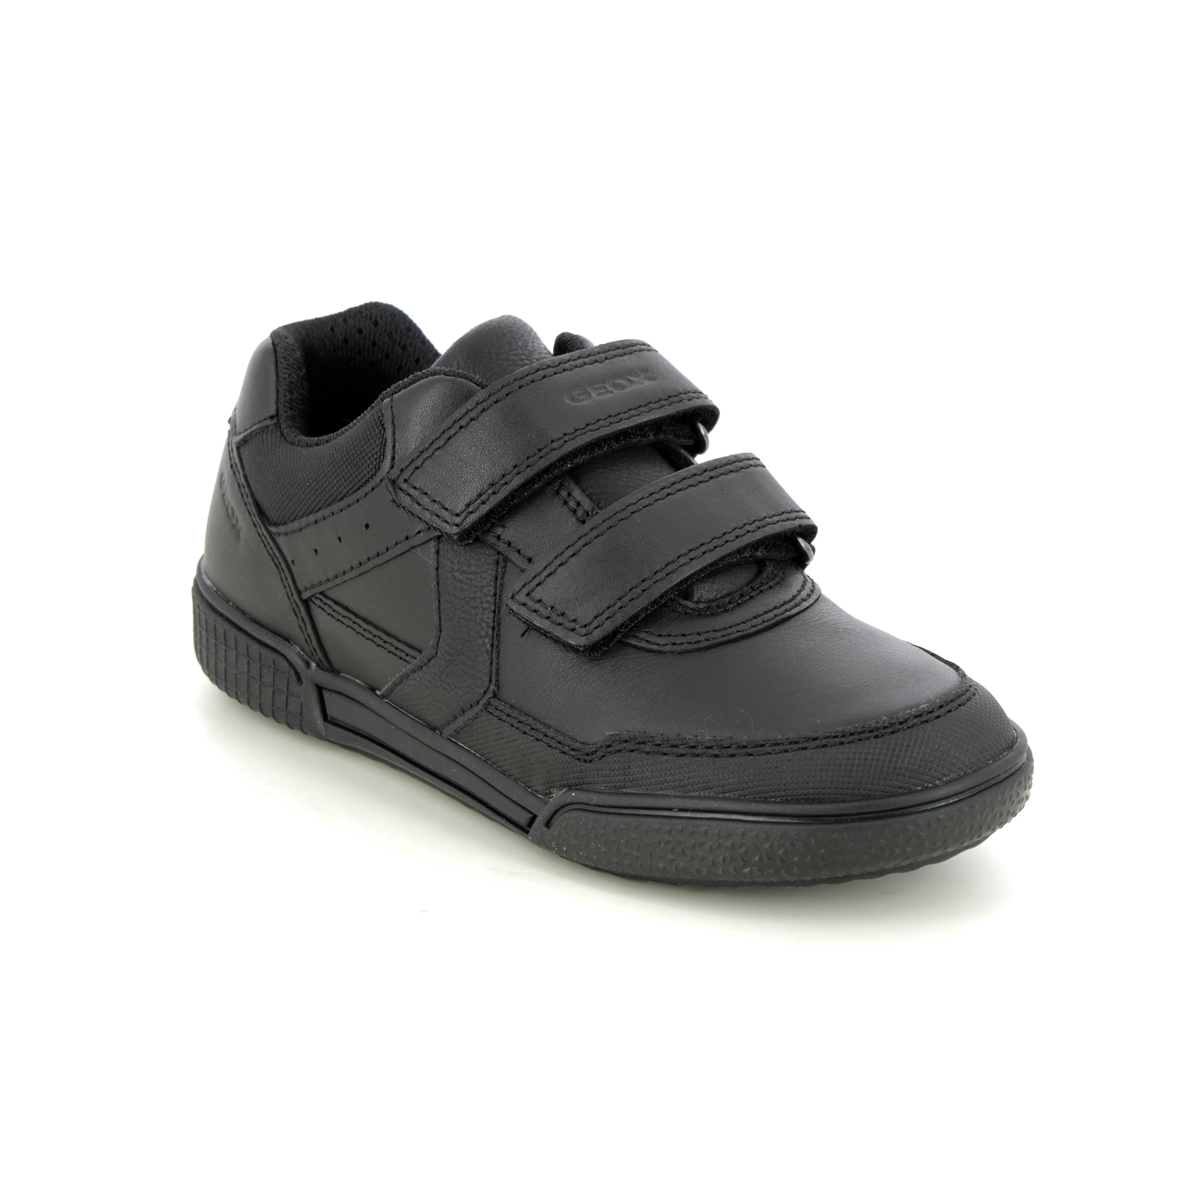 Geox - Poseido Boy 2V (Black Leather) J02Bca-C9999 In Size 30 In Plain Black Leather For School For kids